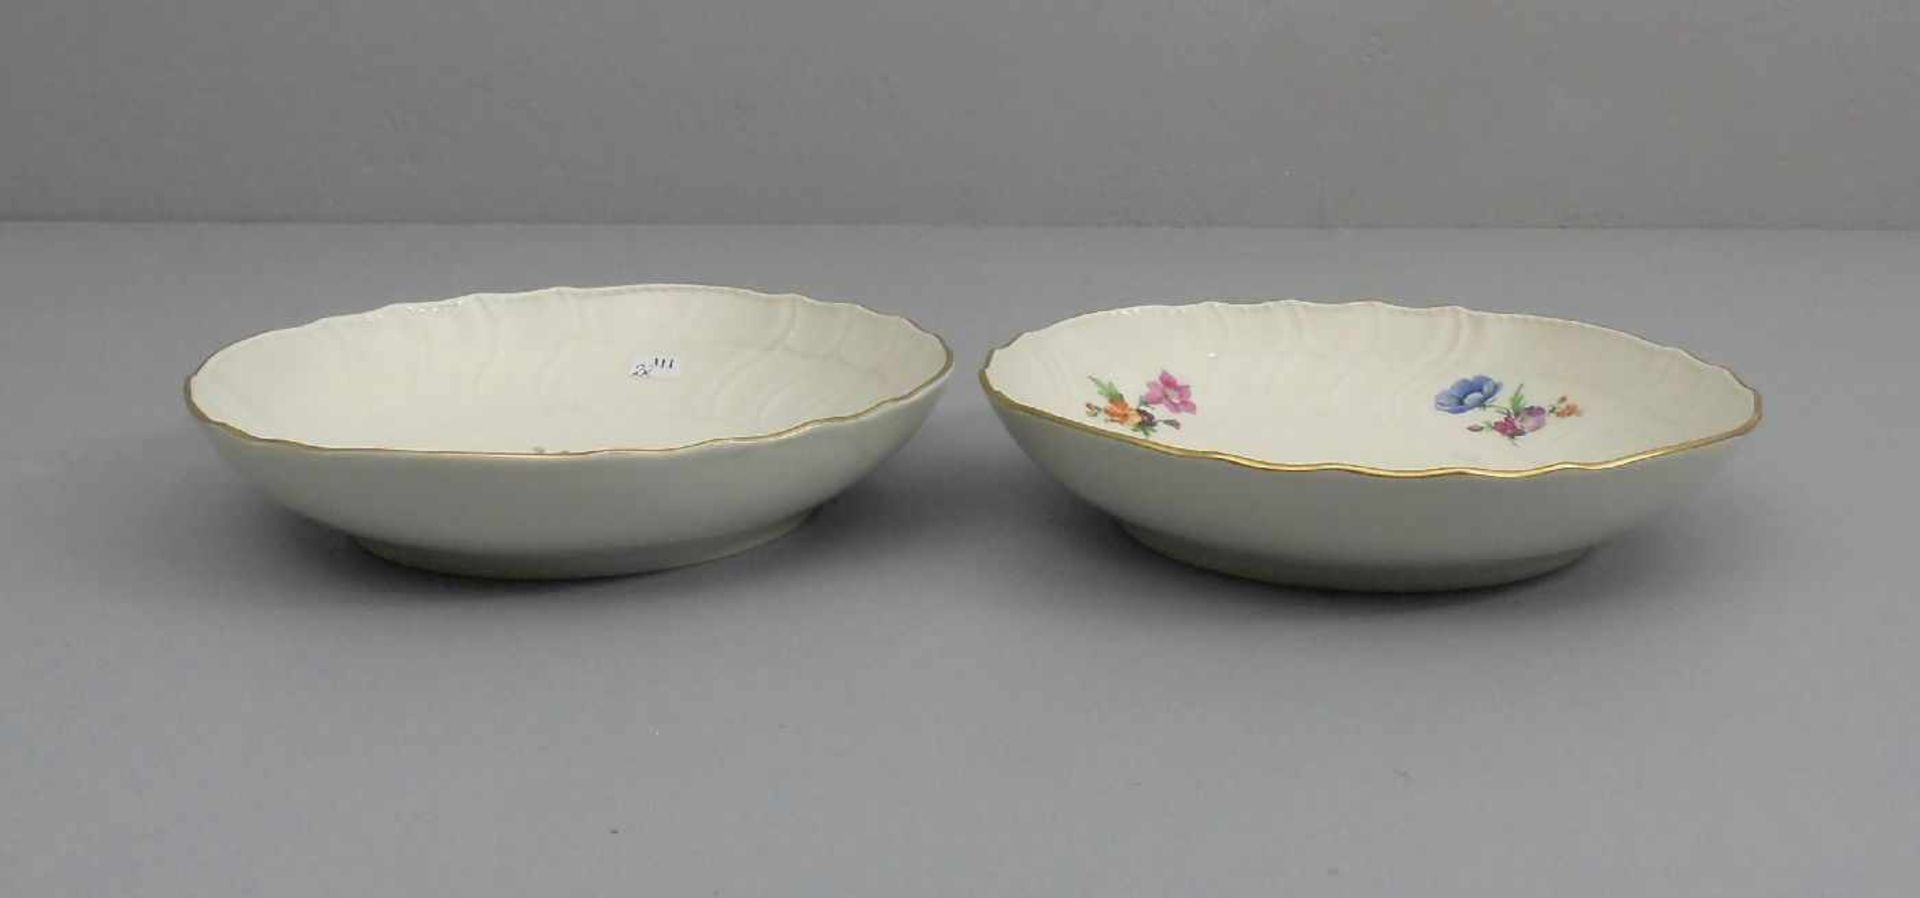 PAAR SCHALEN / pair of bowls, Porzellan, KPM - Königlich Porzellanmanufaktur Berlin, - Image 2 of 3